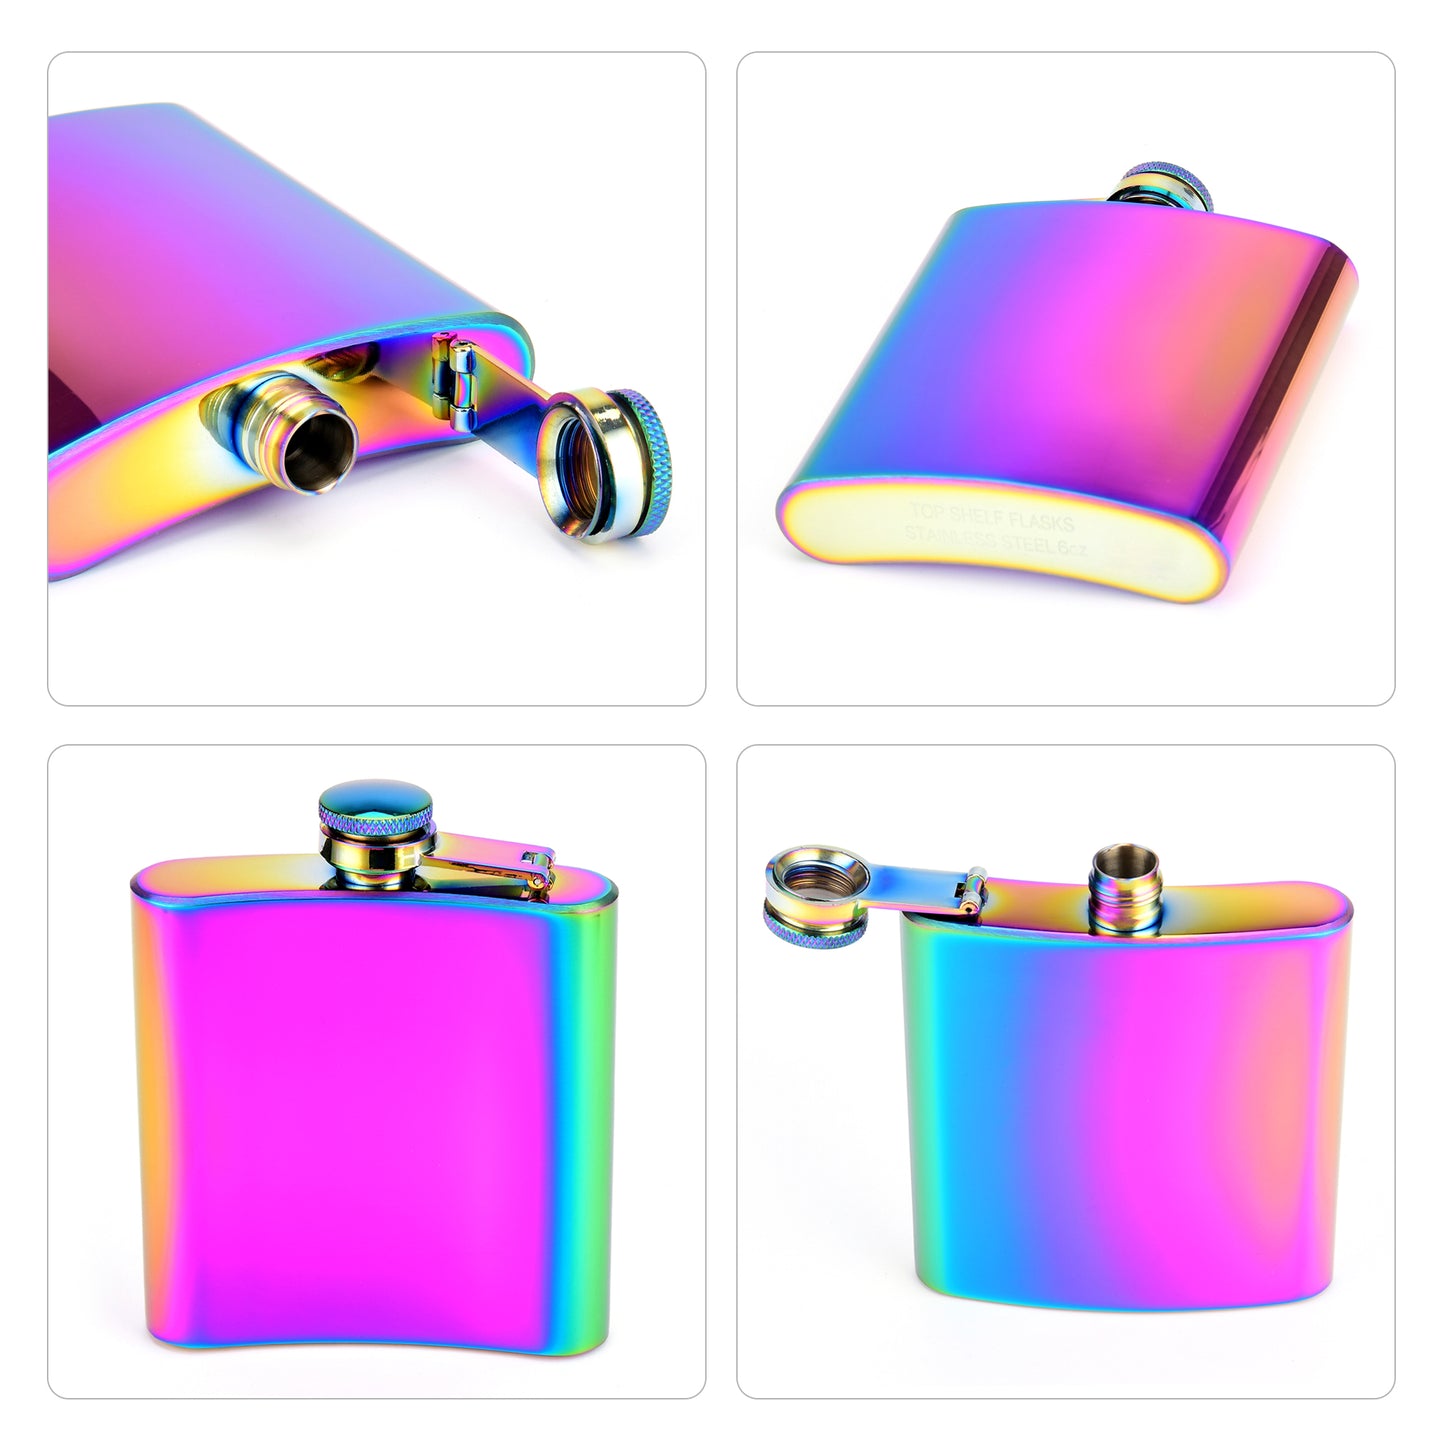 6oz Rainbow Colored Hip Flask